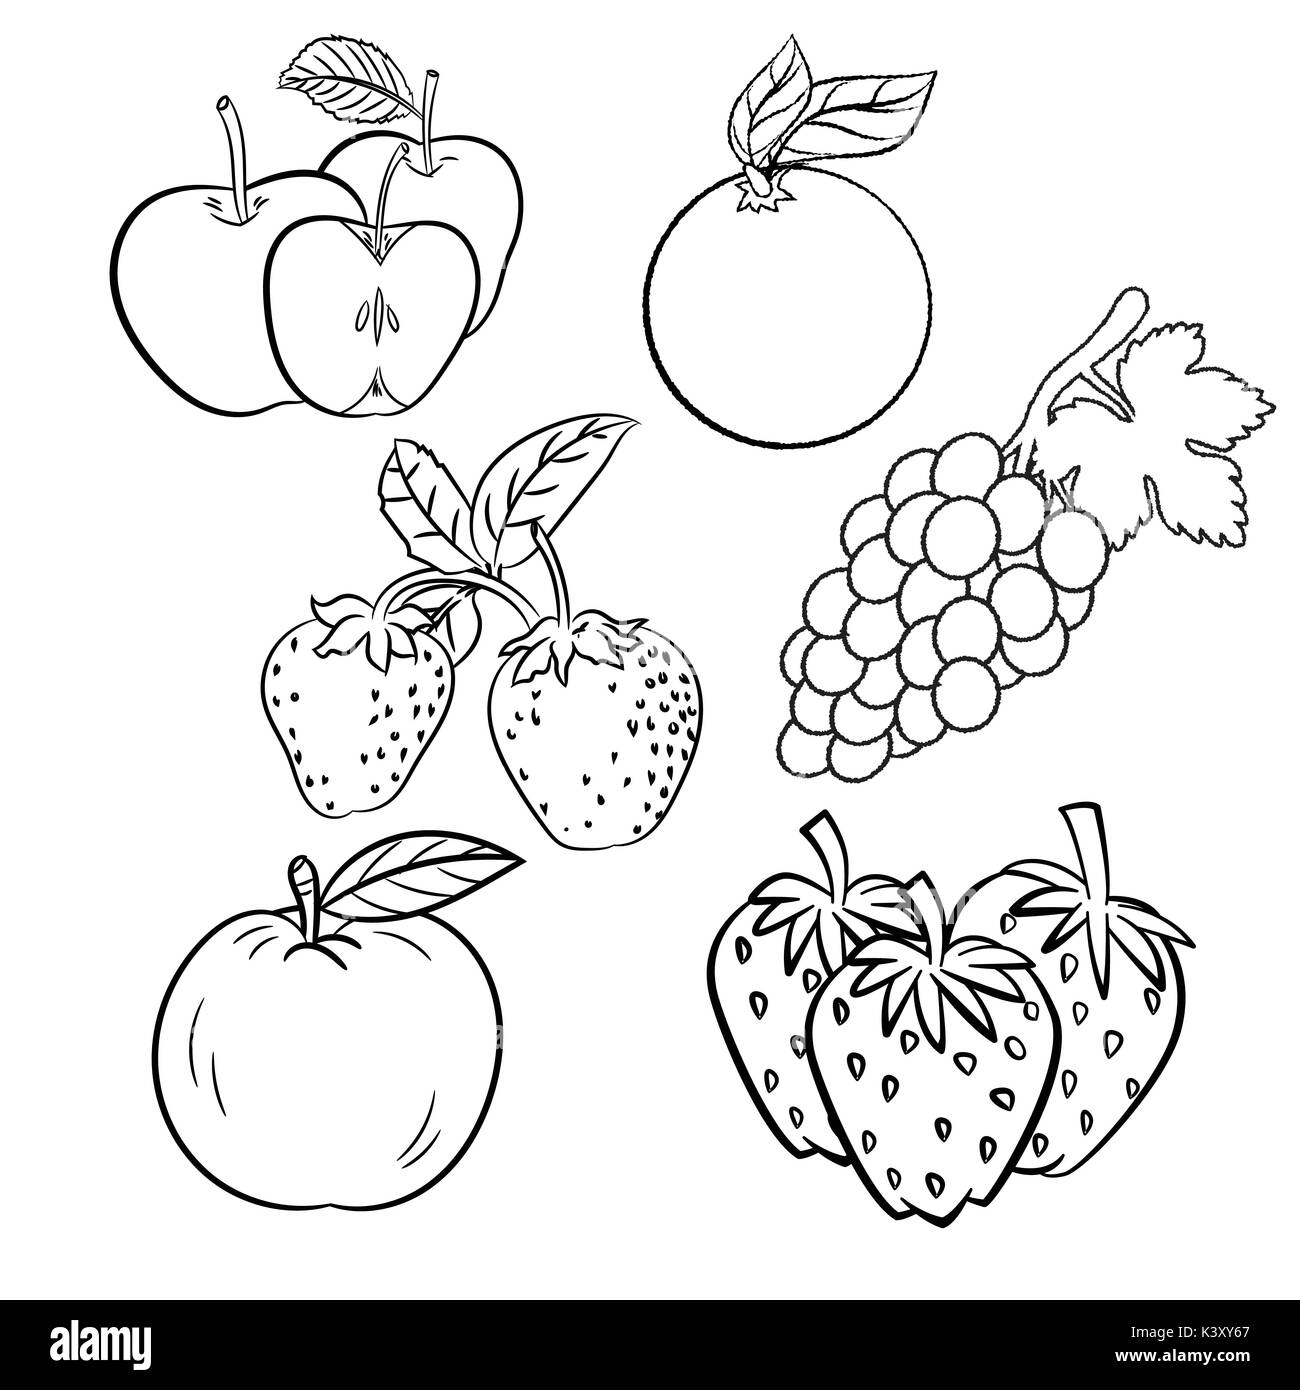 Fruit Set Handdrawn Different Cartoon Fruits Stock Vector Royalty Free  319043423  Shutterstock